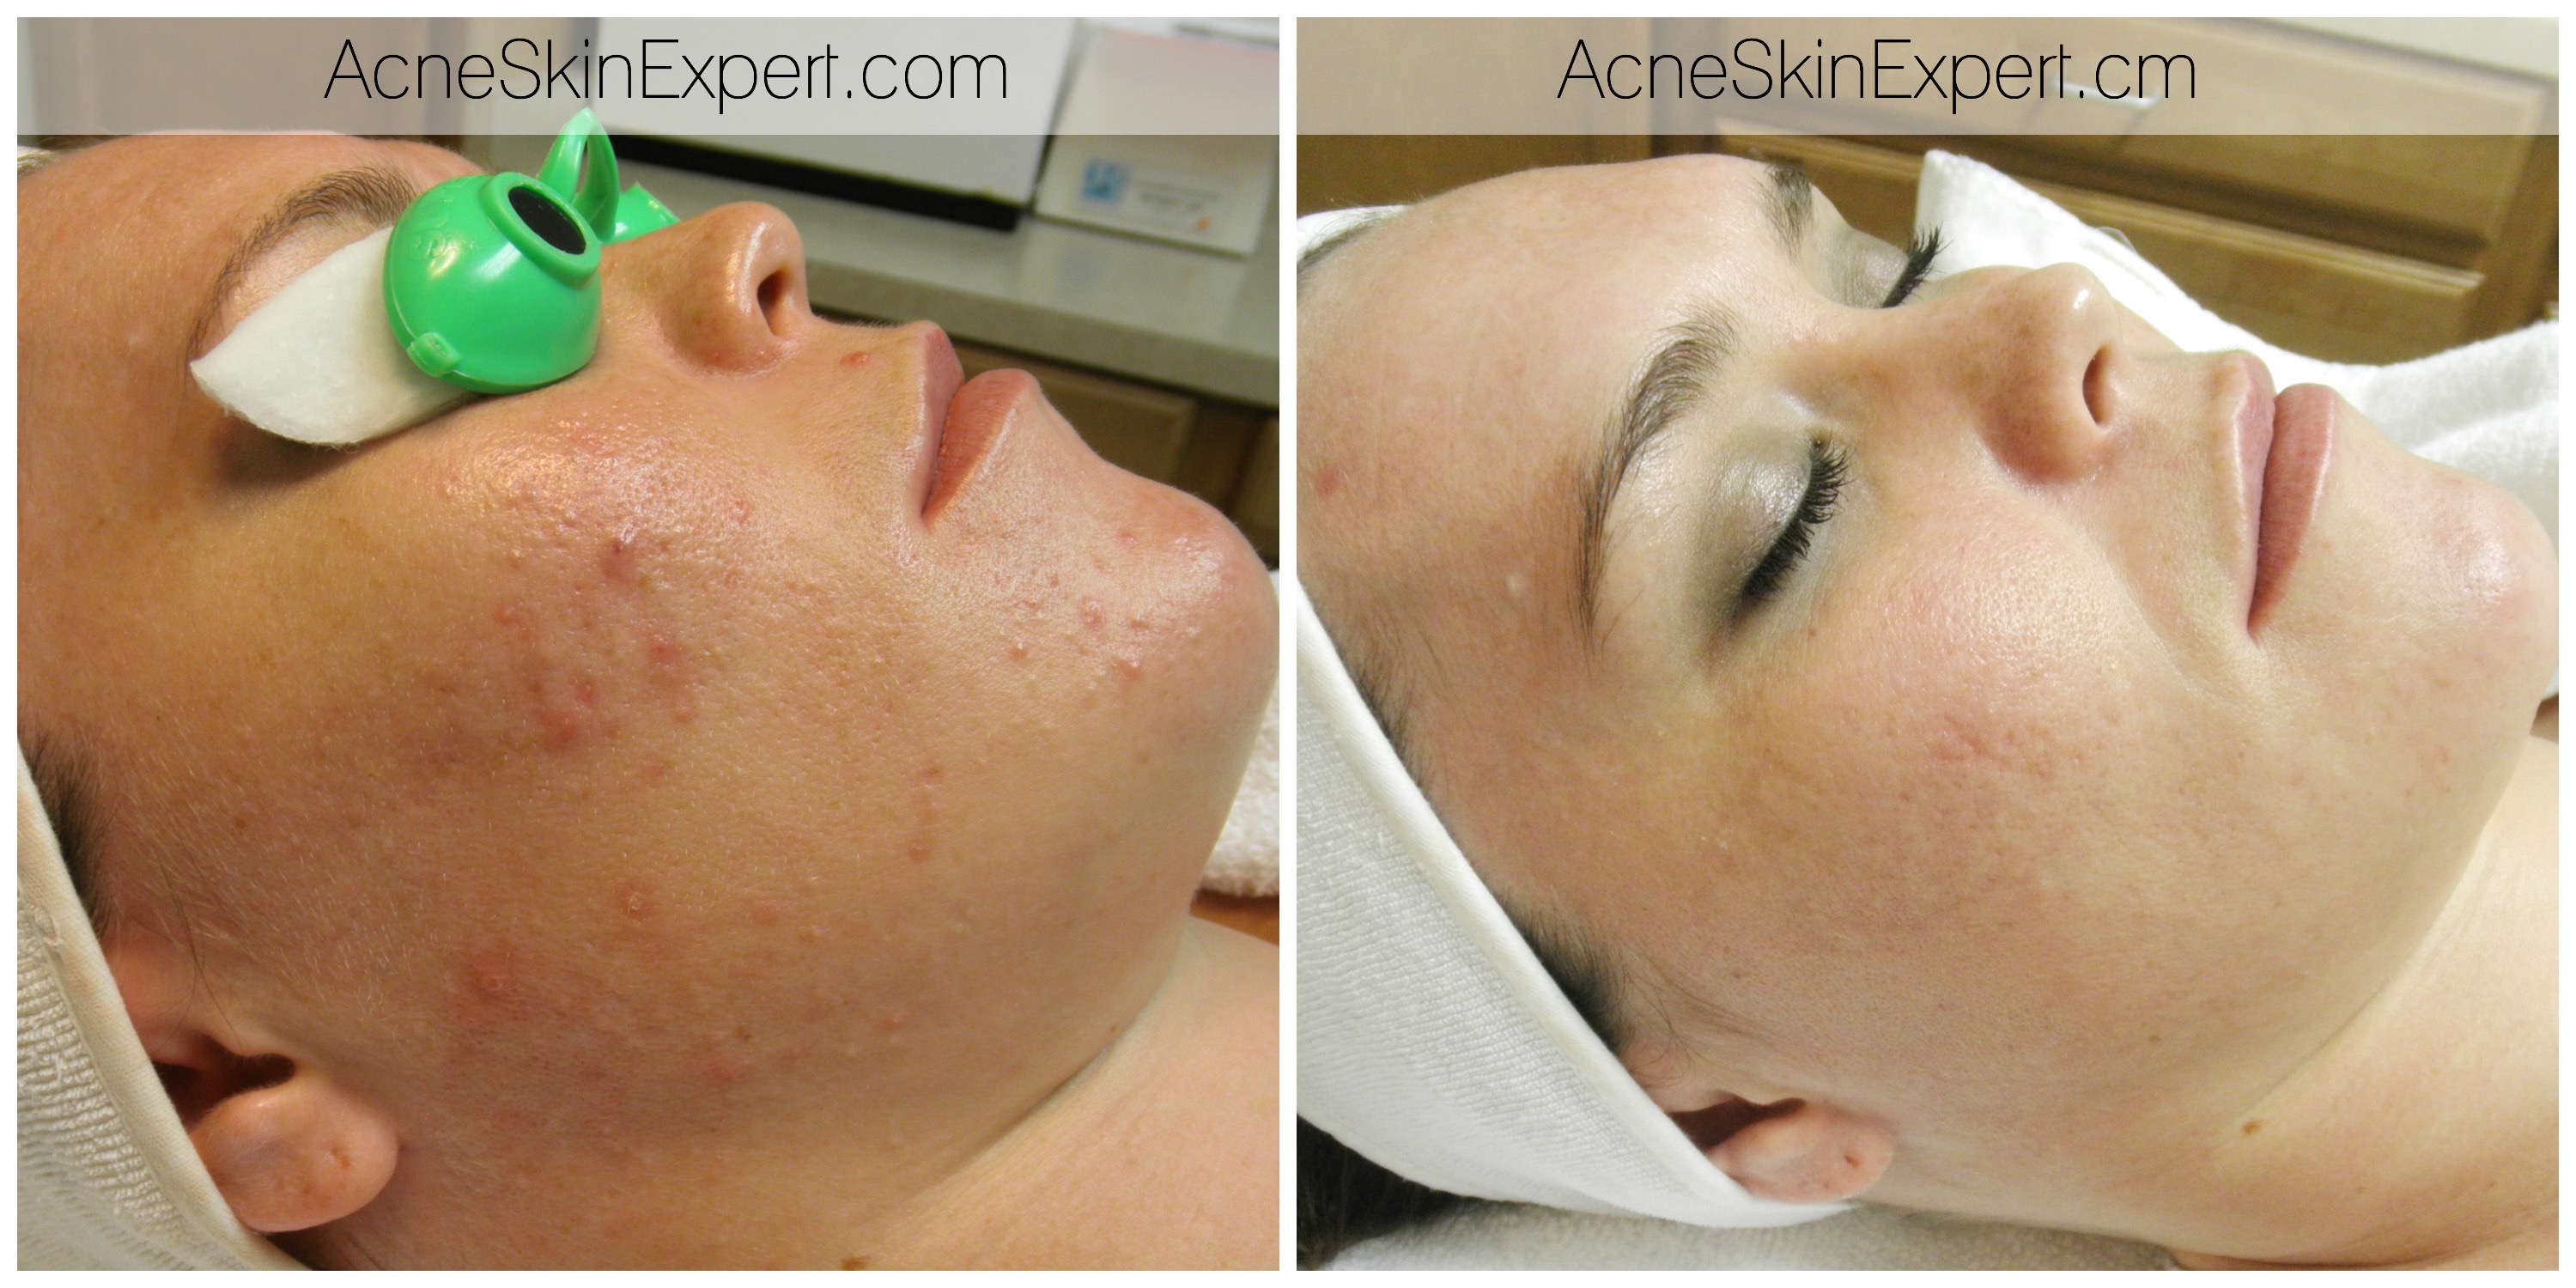 acne-treatment-oily-combination-AcneSkinExpert.com